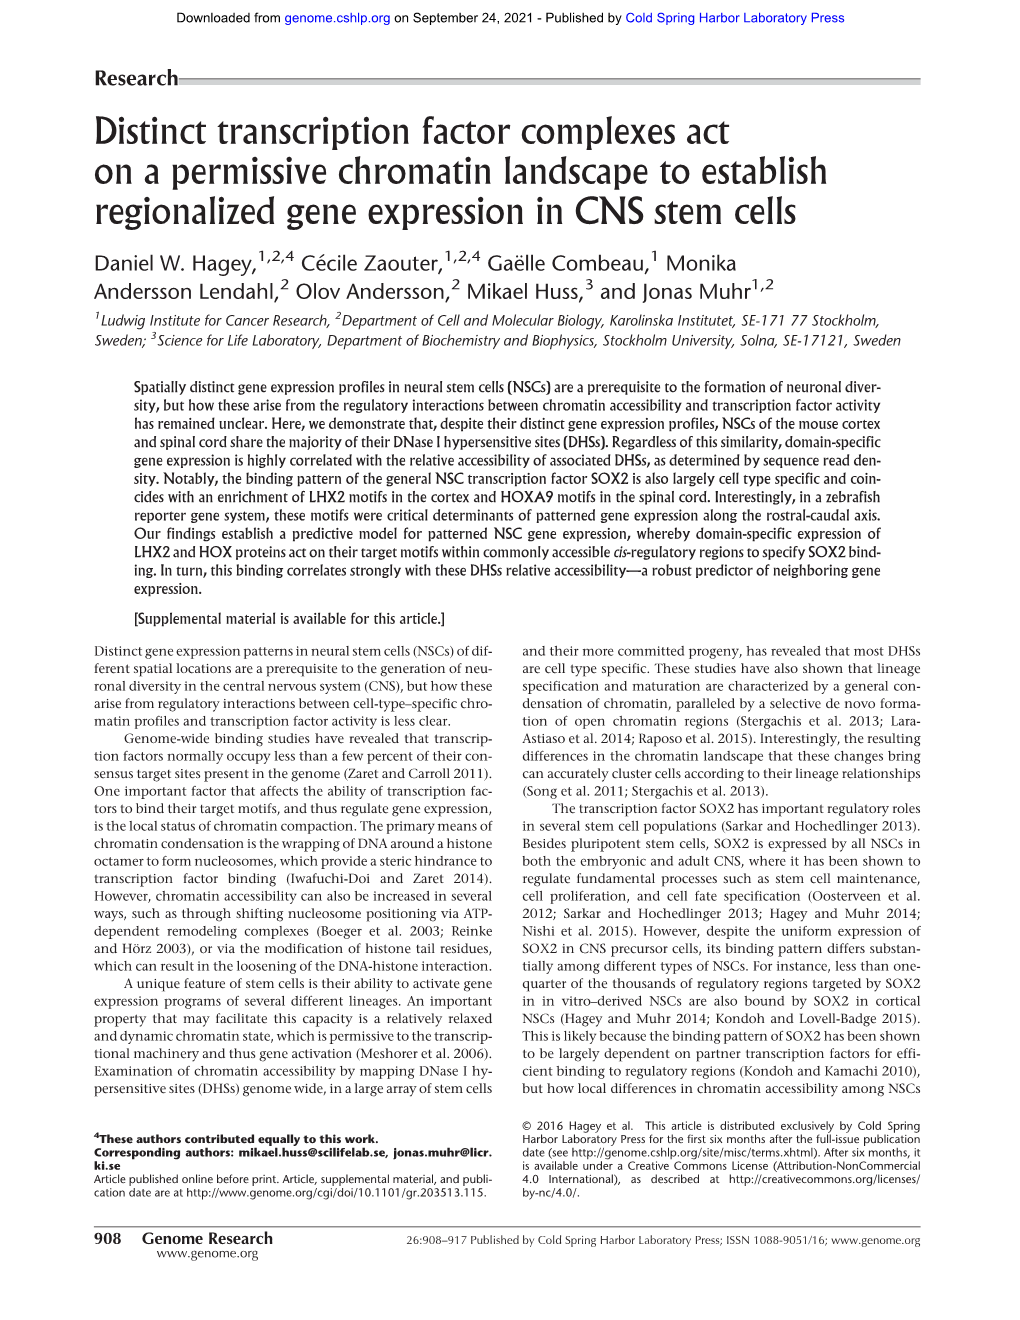 Distinct Transcription Factor Complexes Act on a Permissive Chromatin Landscape to Establish Regionalized Gene Expression in CNS Stem Cells